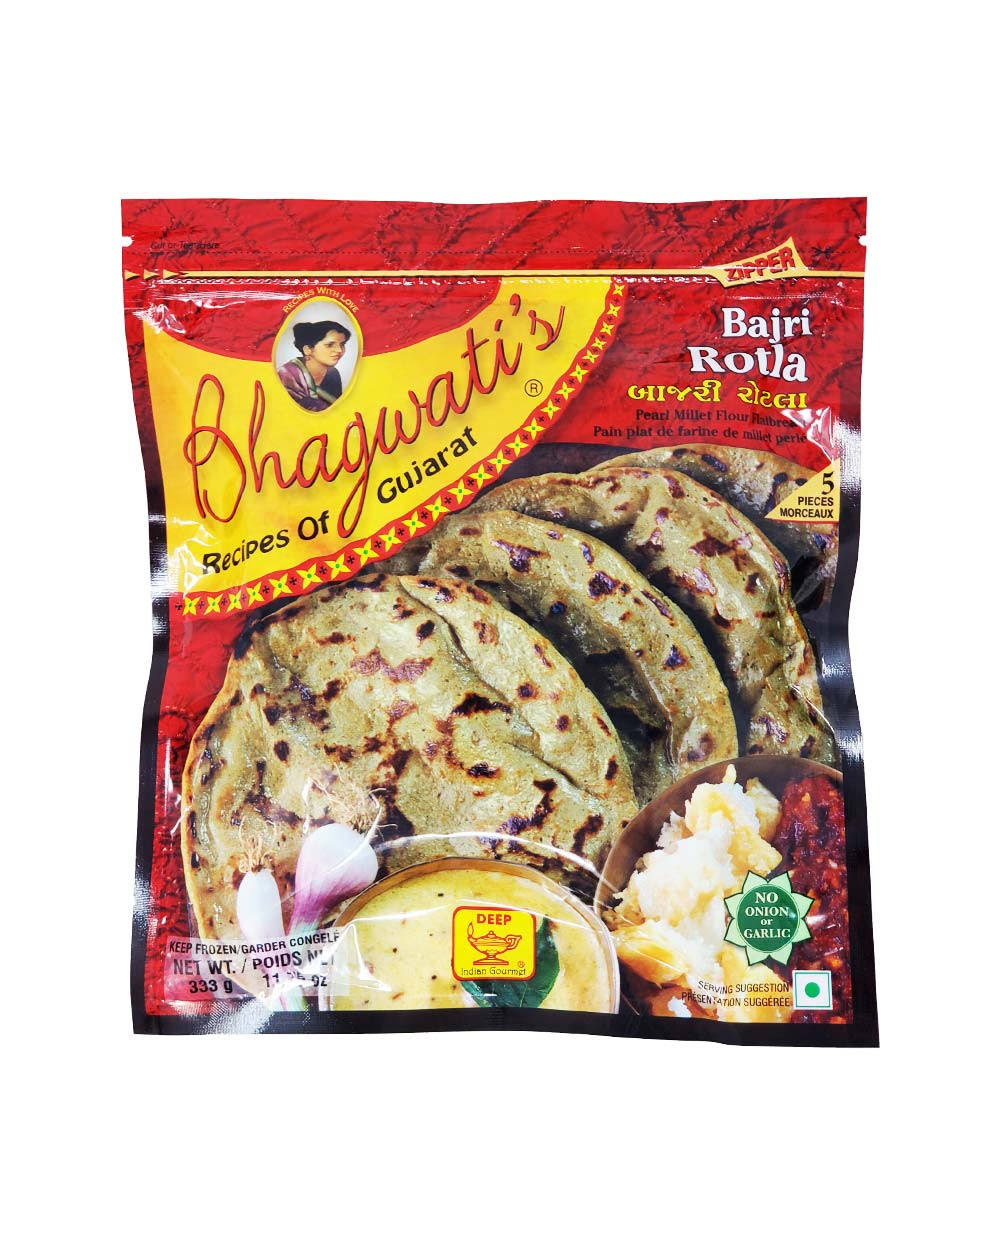 Deep Bhagwati's Bajri Rotla Millet Flour Bread - 5 ct - 11.75 oz